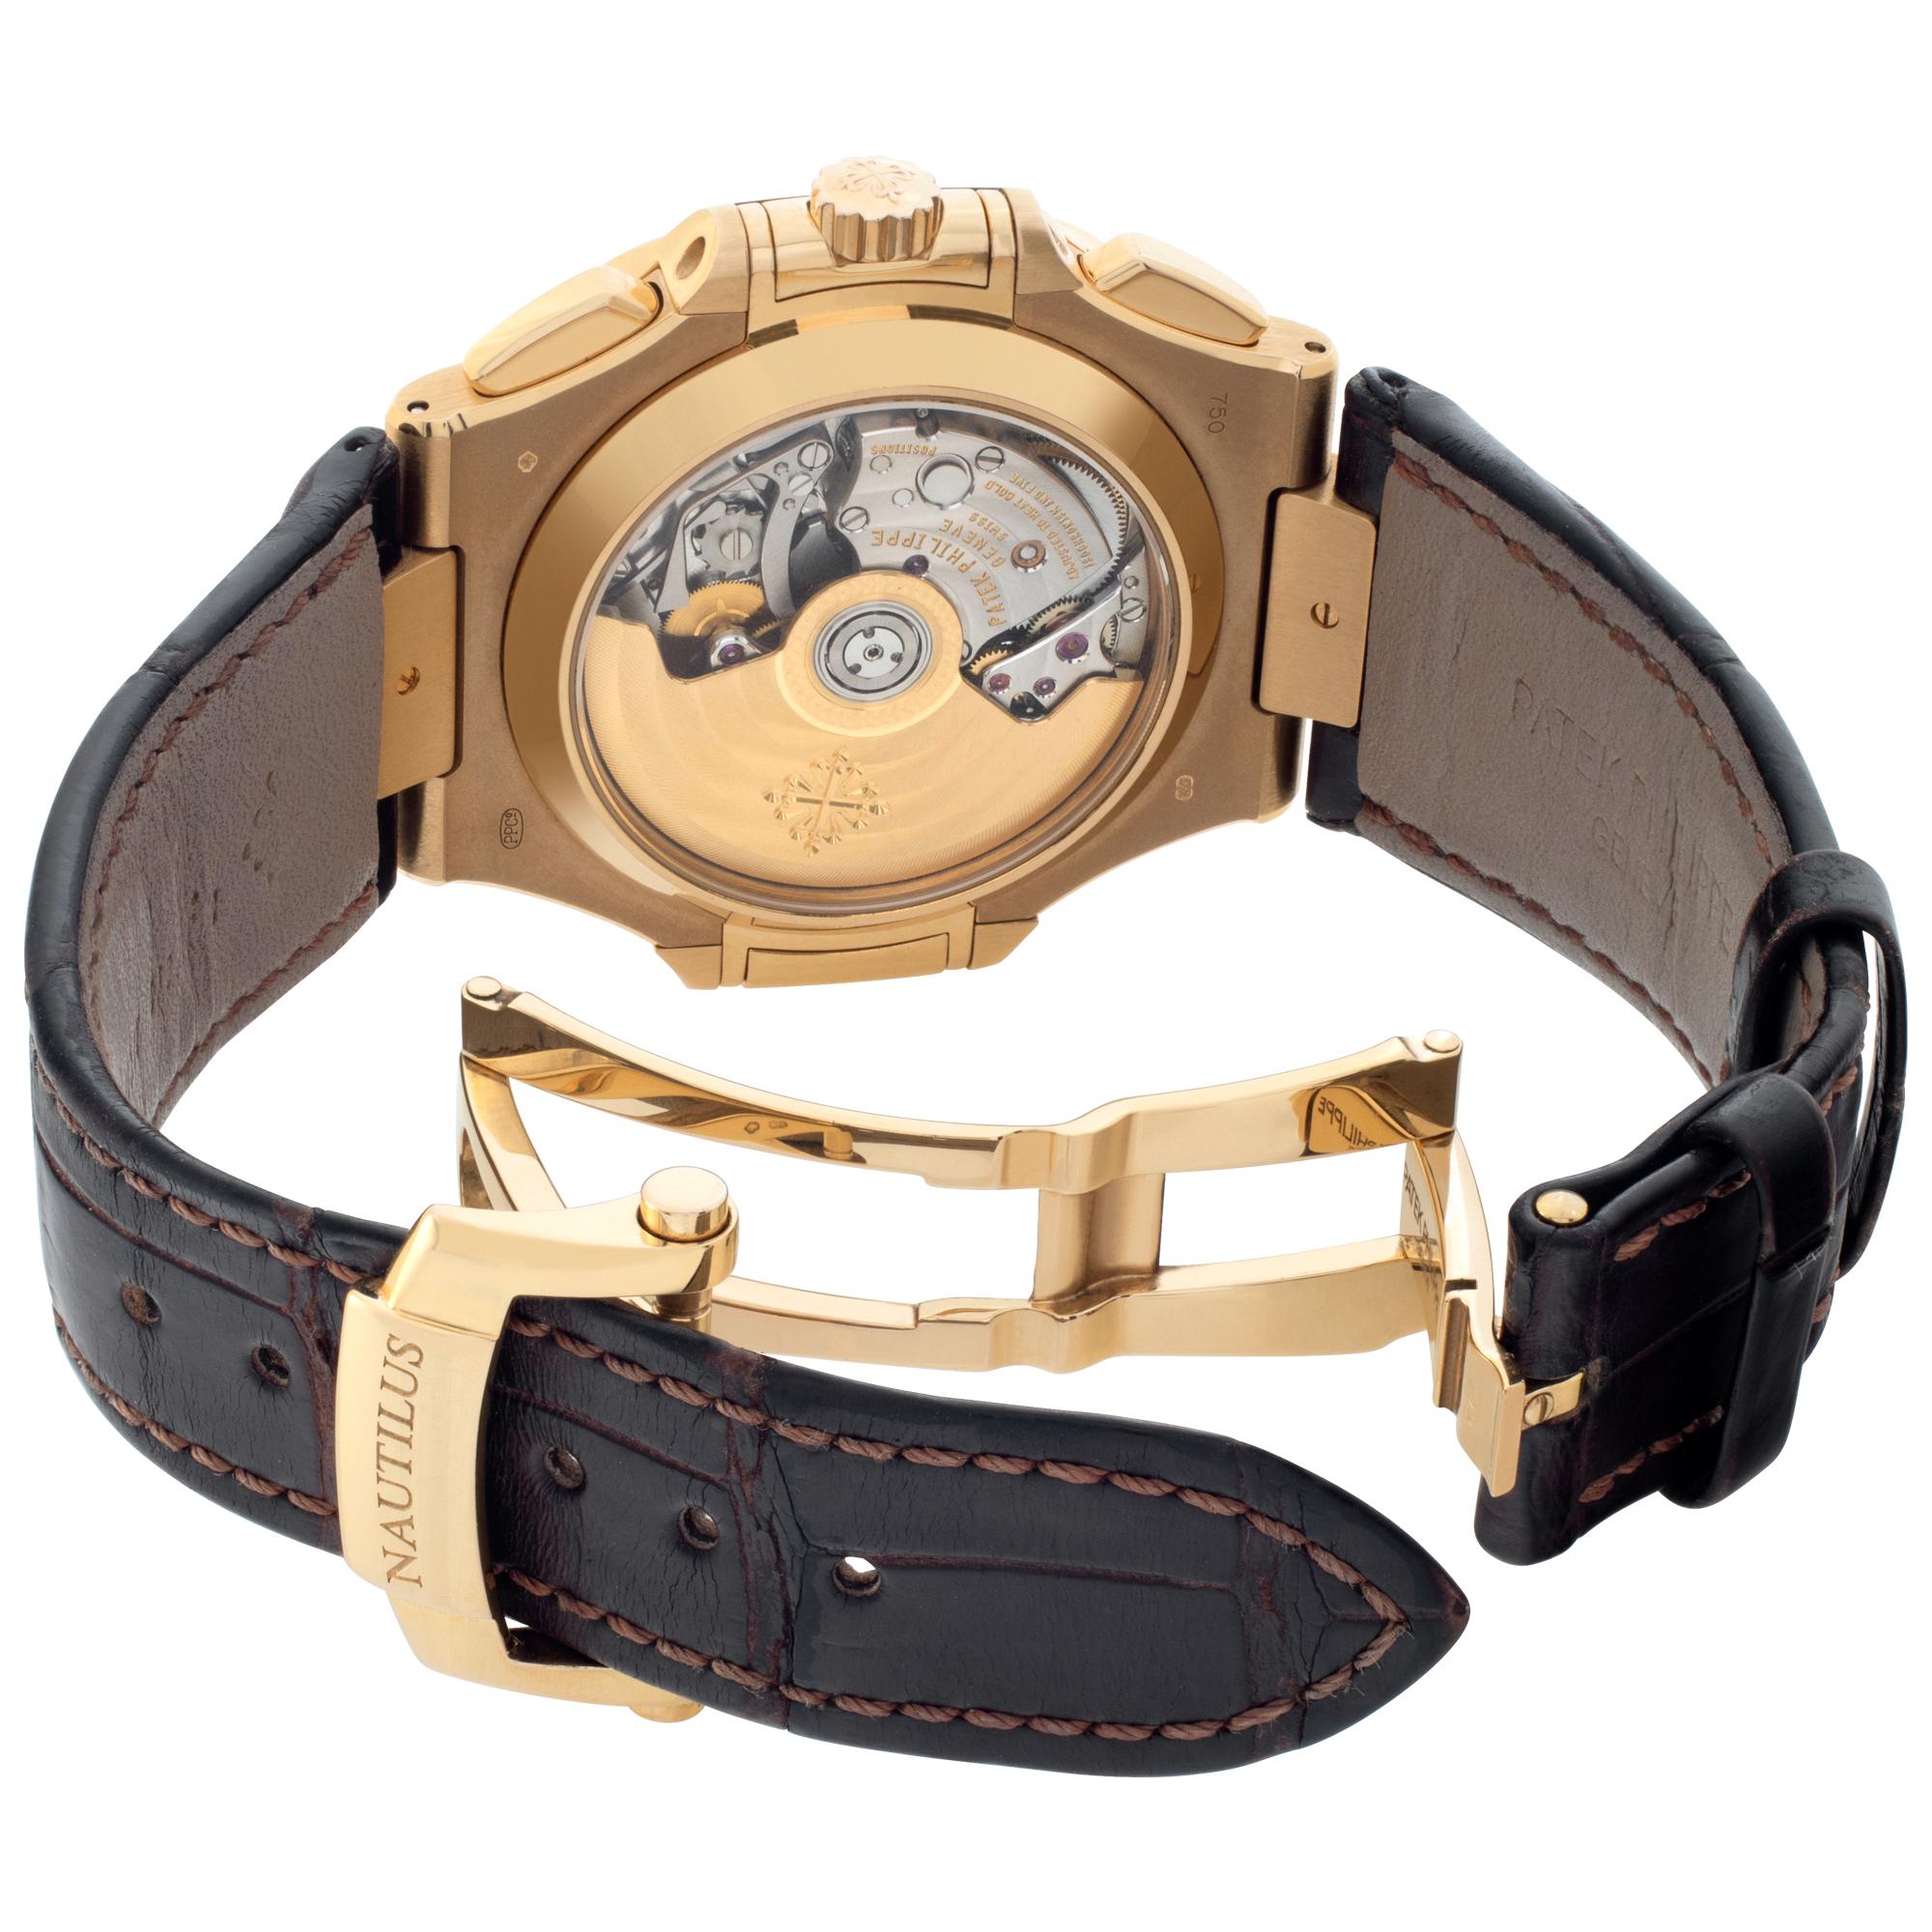 Men's Patek Philippe Nautilus 5980r-001 in rose gold 38.5mm auto watch For Sale